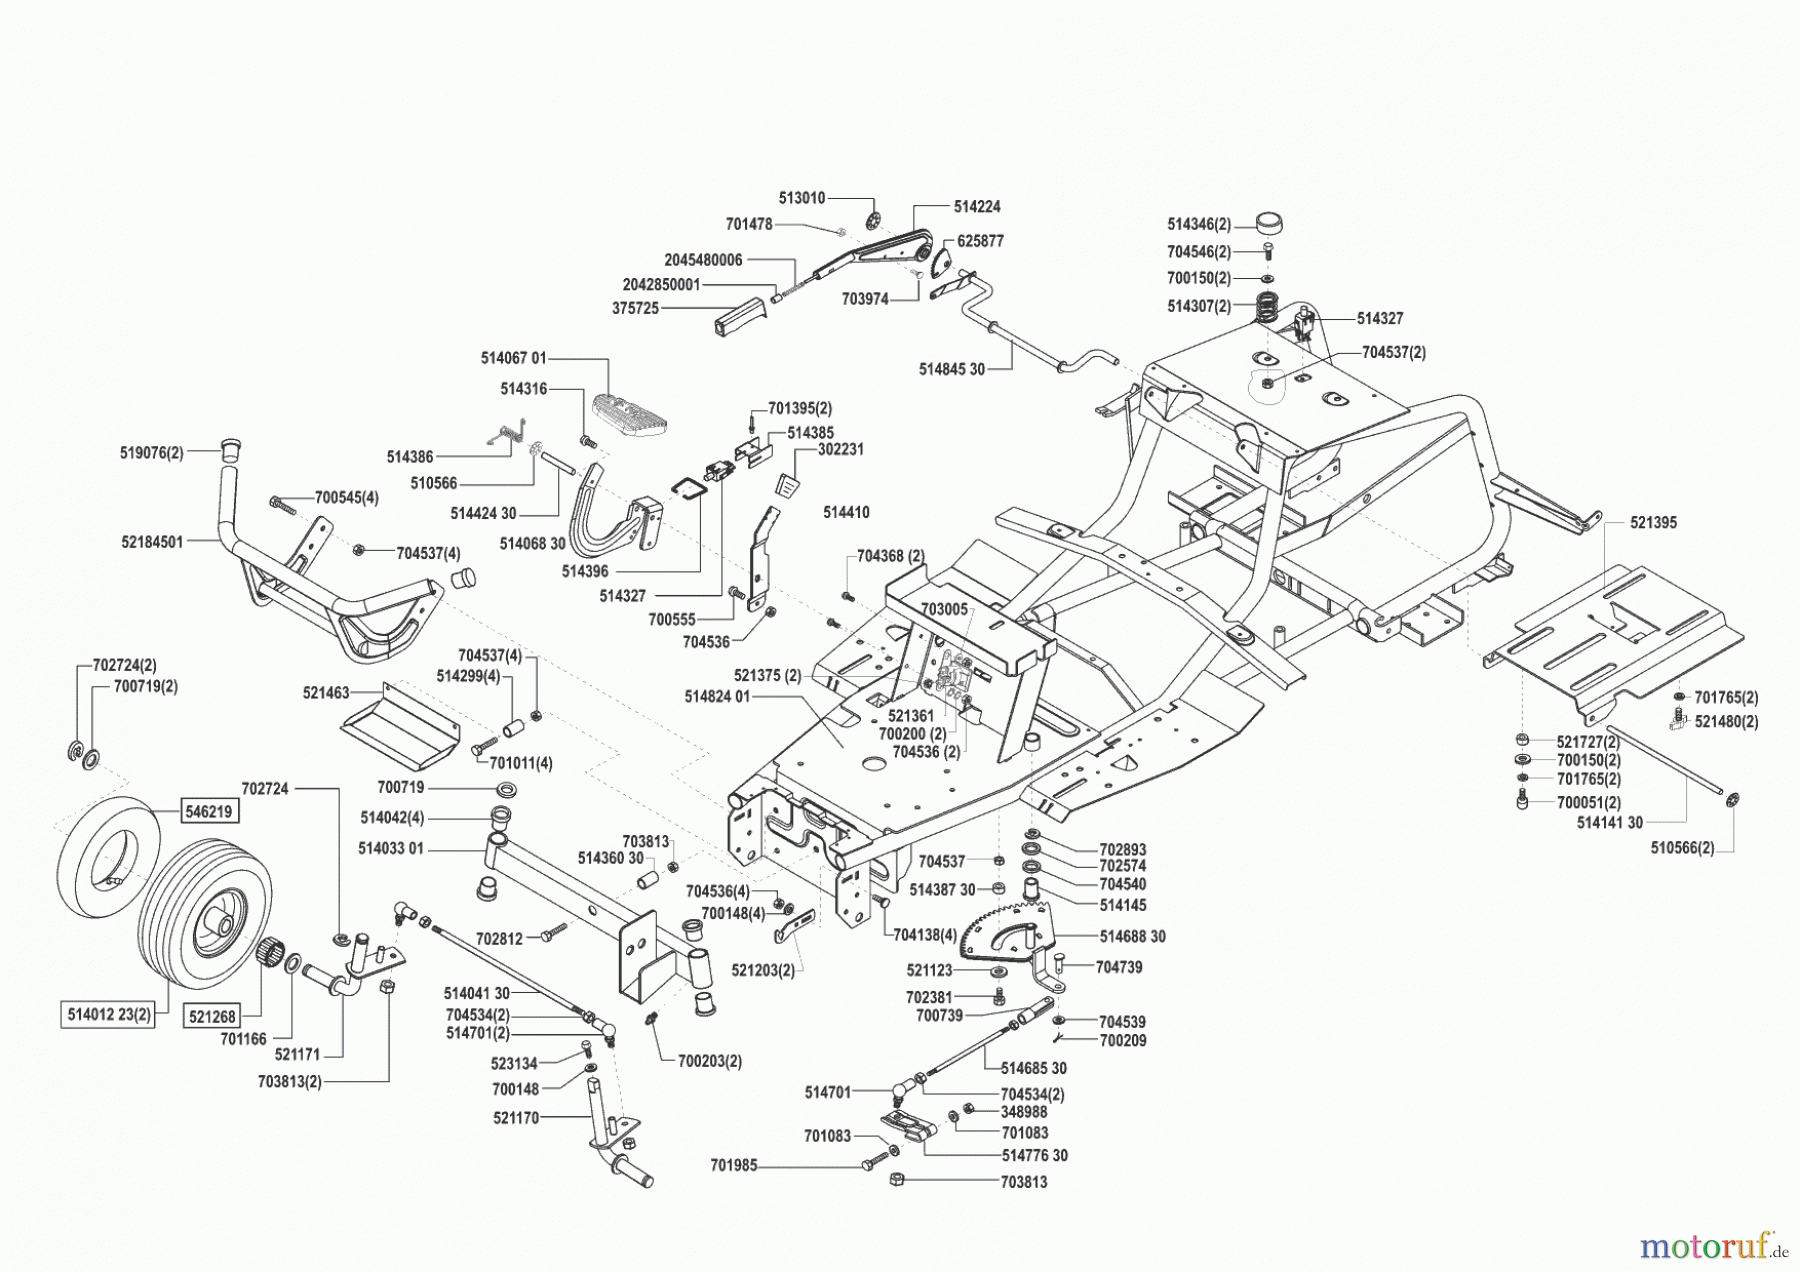  Concord Gartentechnik Rasentraktor T13-102 MAS Seite 2